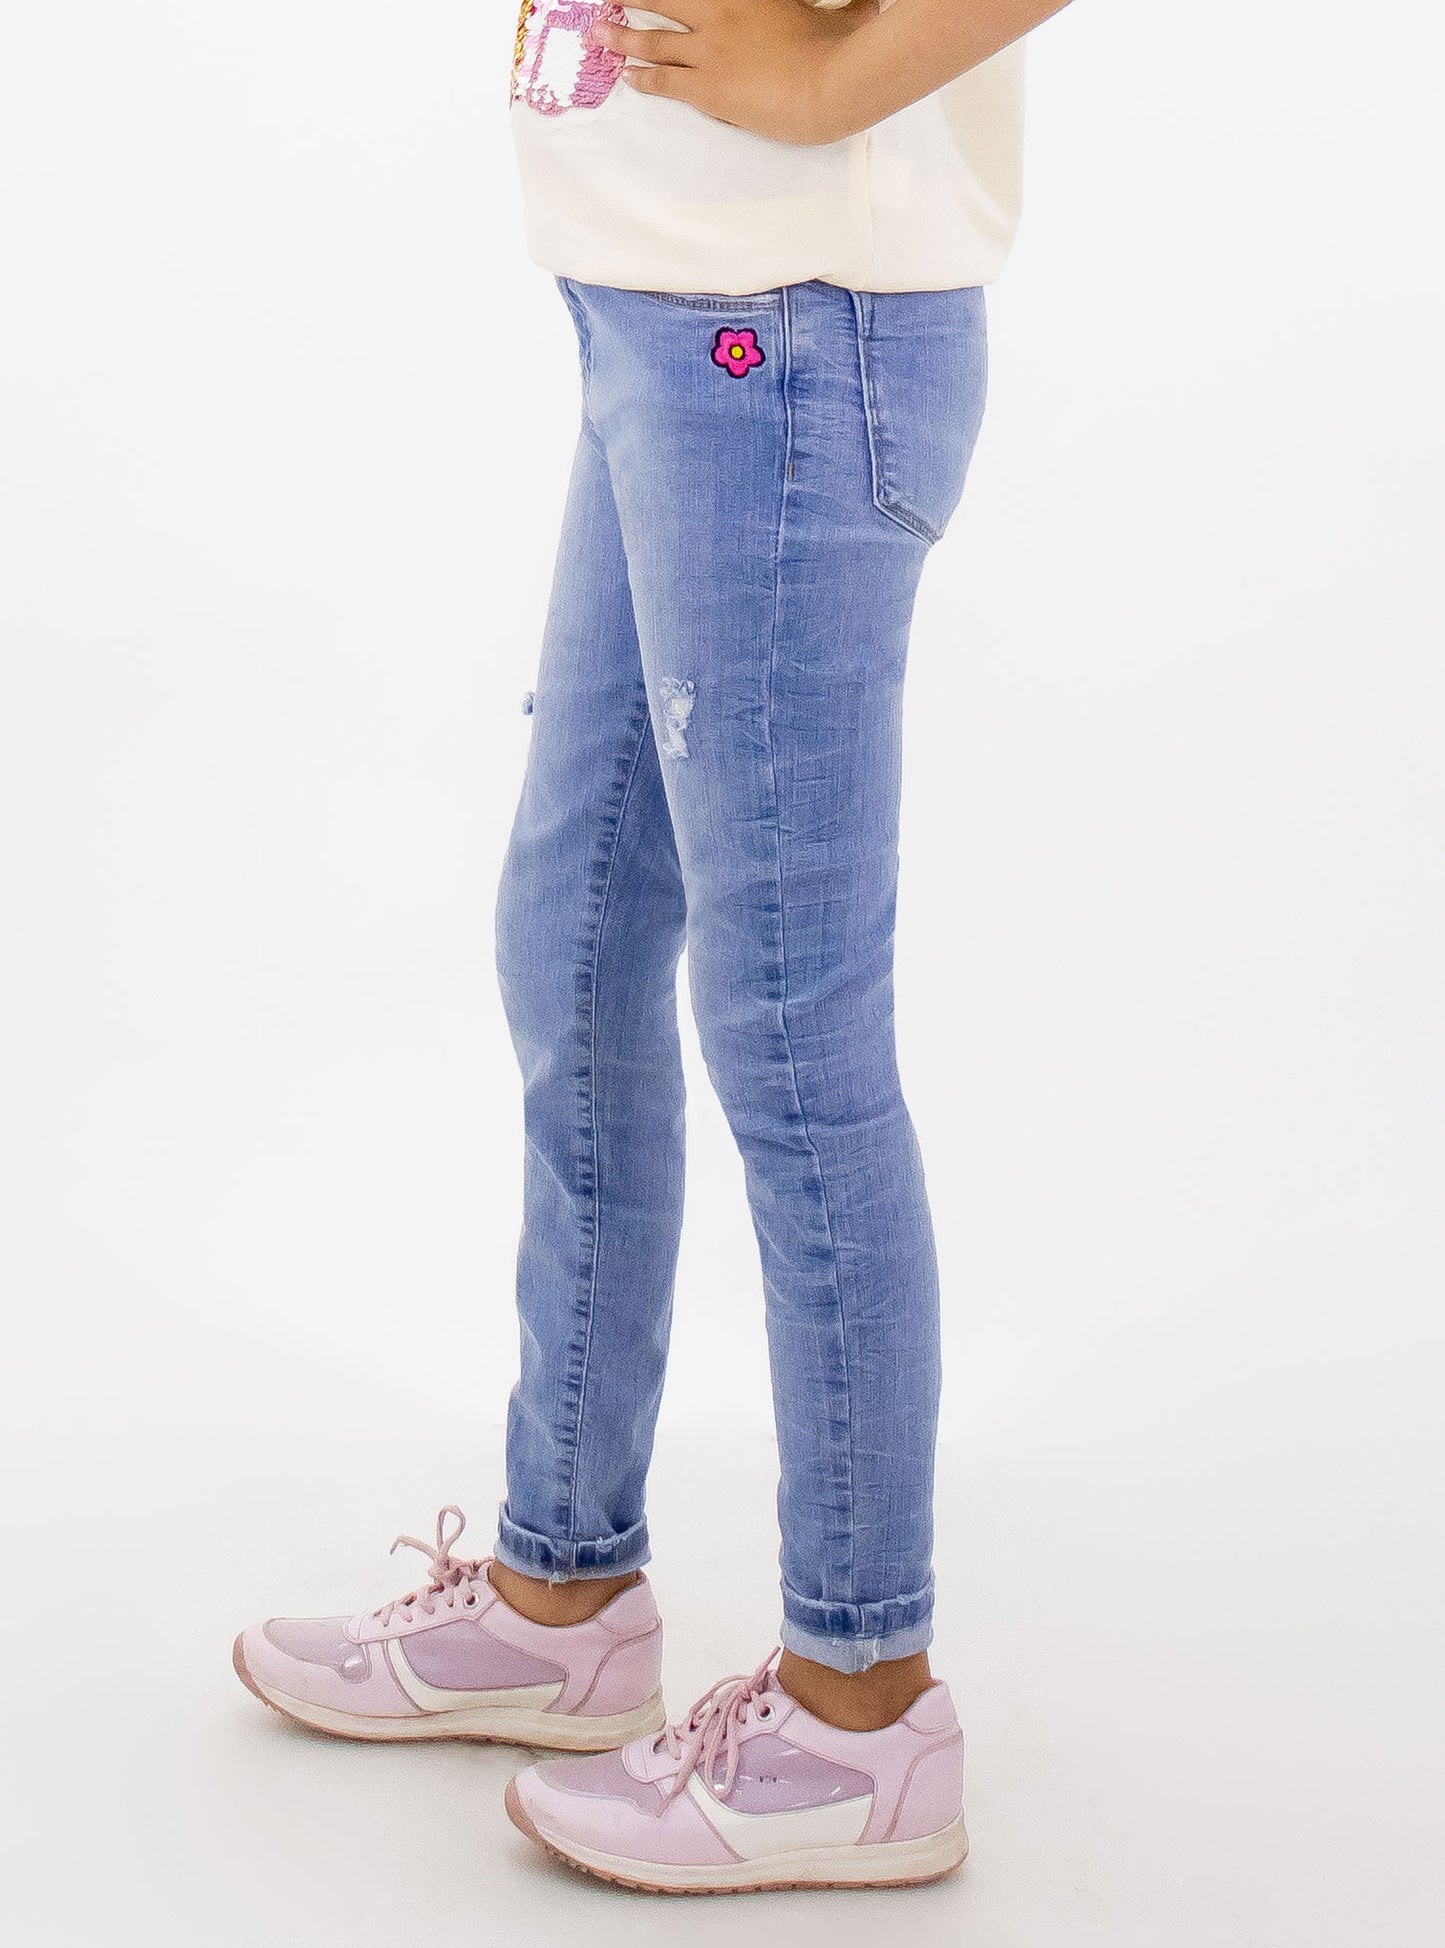 Jeans skinny con bordado floral